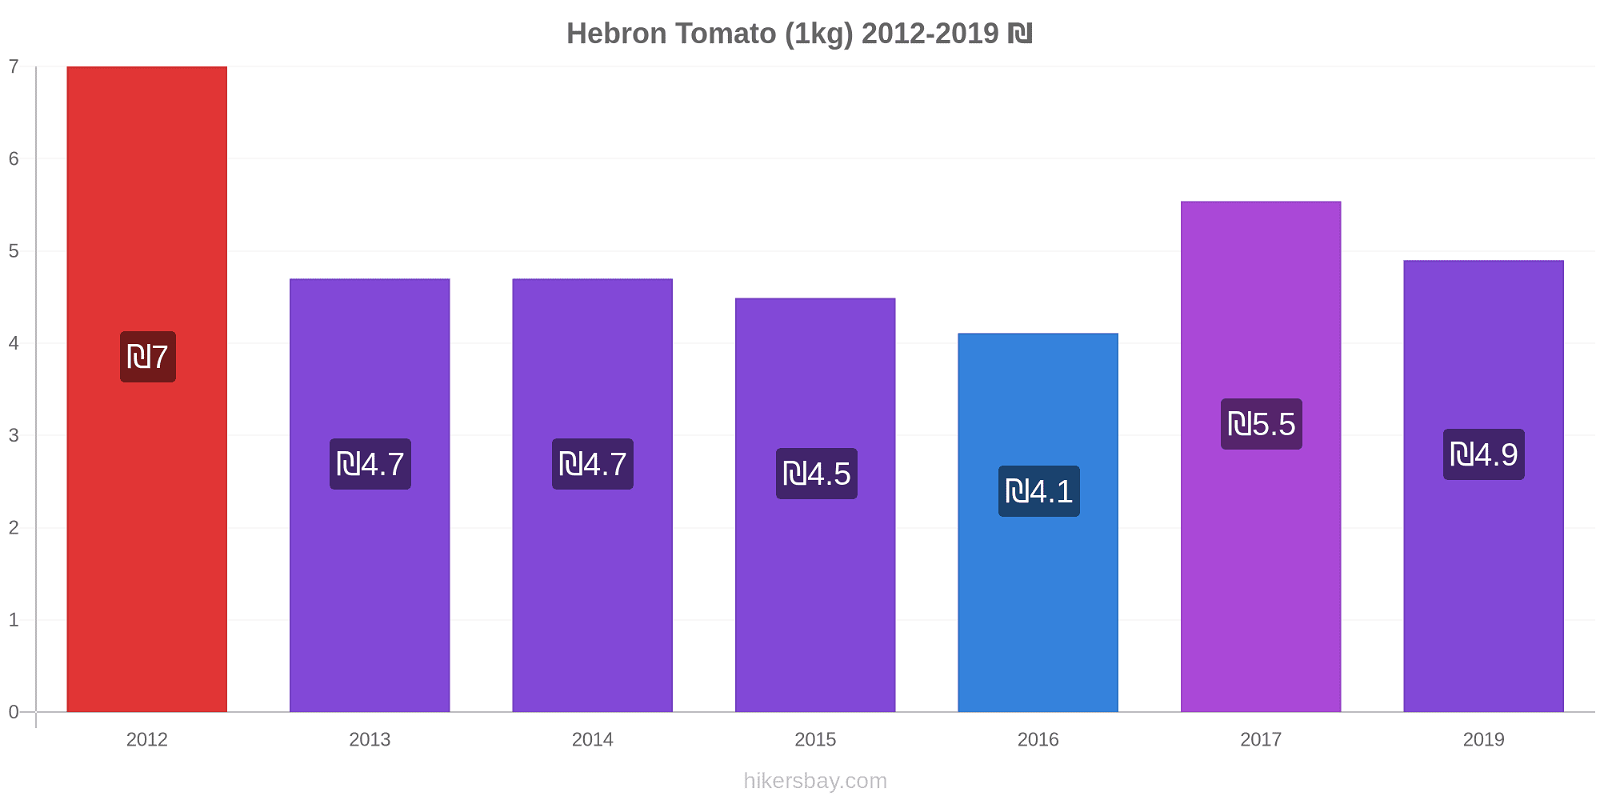 Hebron price changes Tomato (1kg) hikersbay.com